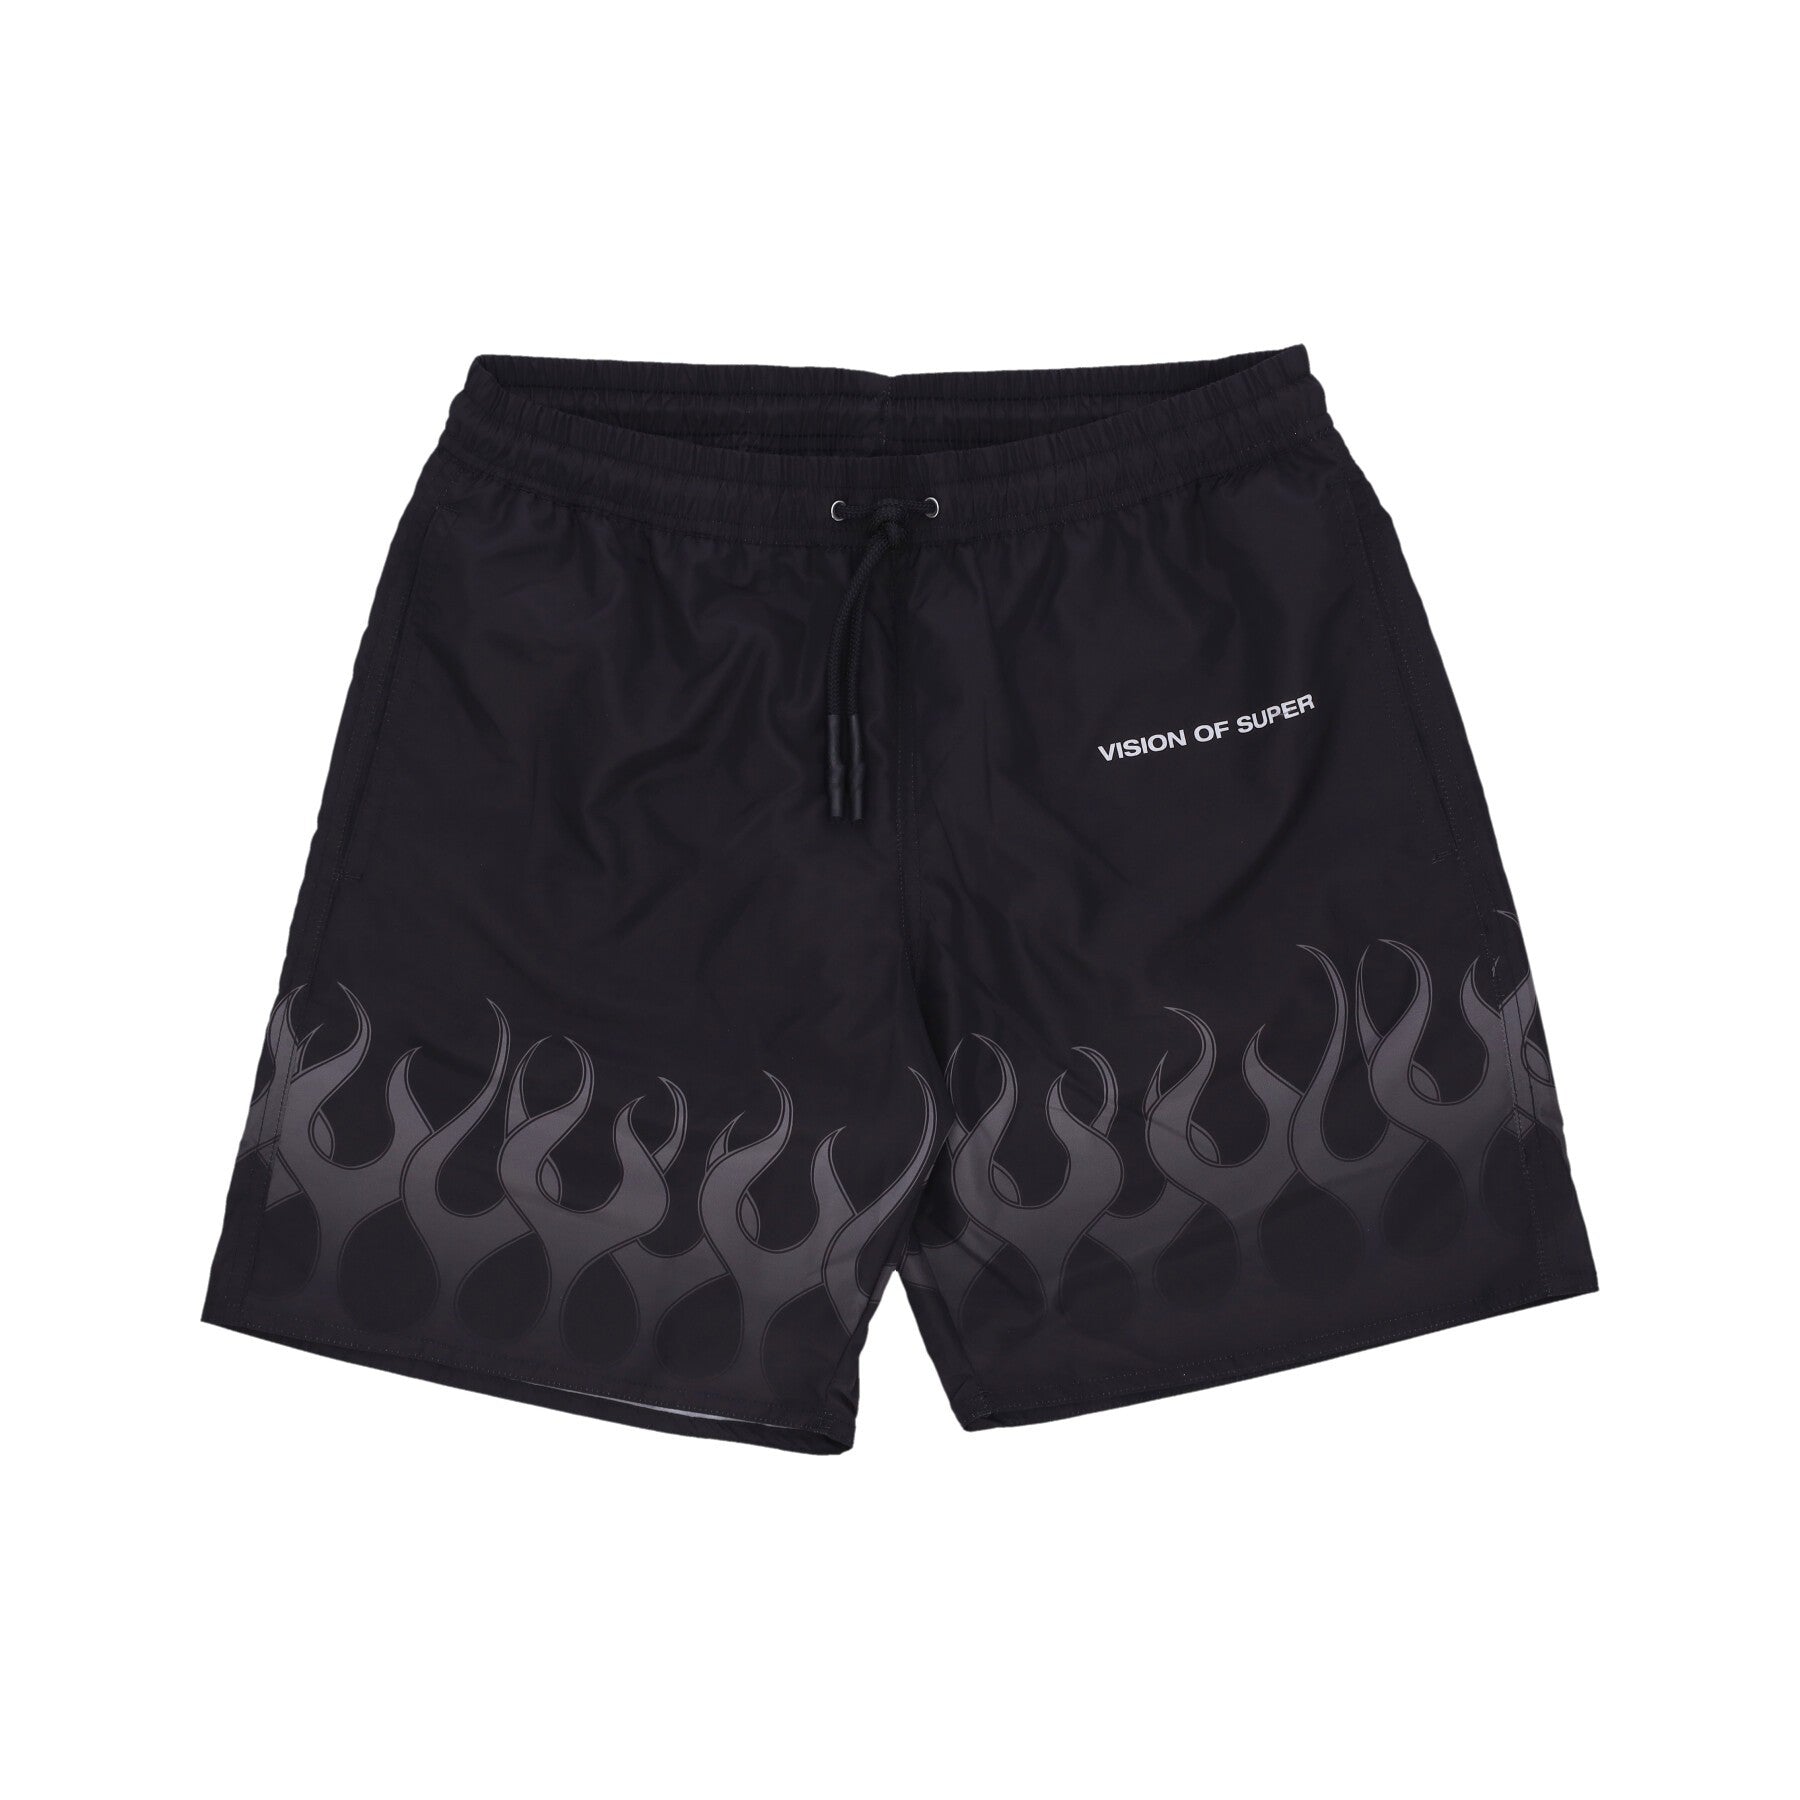 Vision Of Super, Costume Pantaloncino Uomo Flames Swimwear, Black/grey